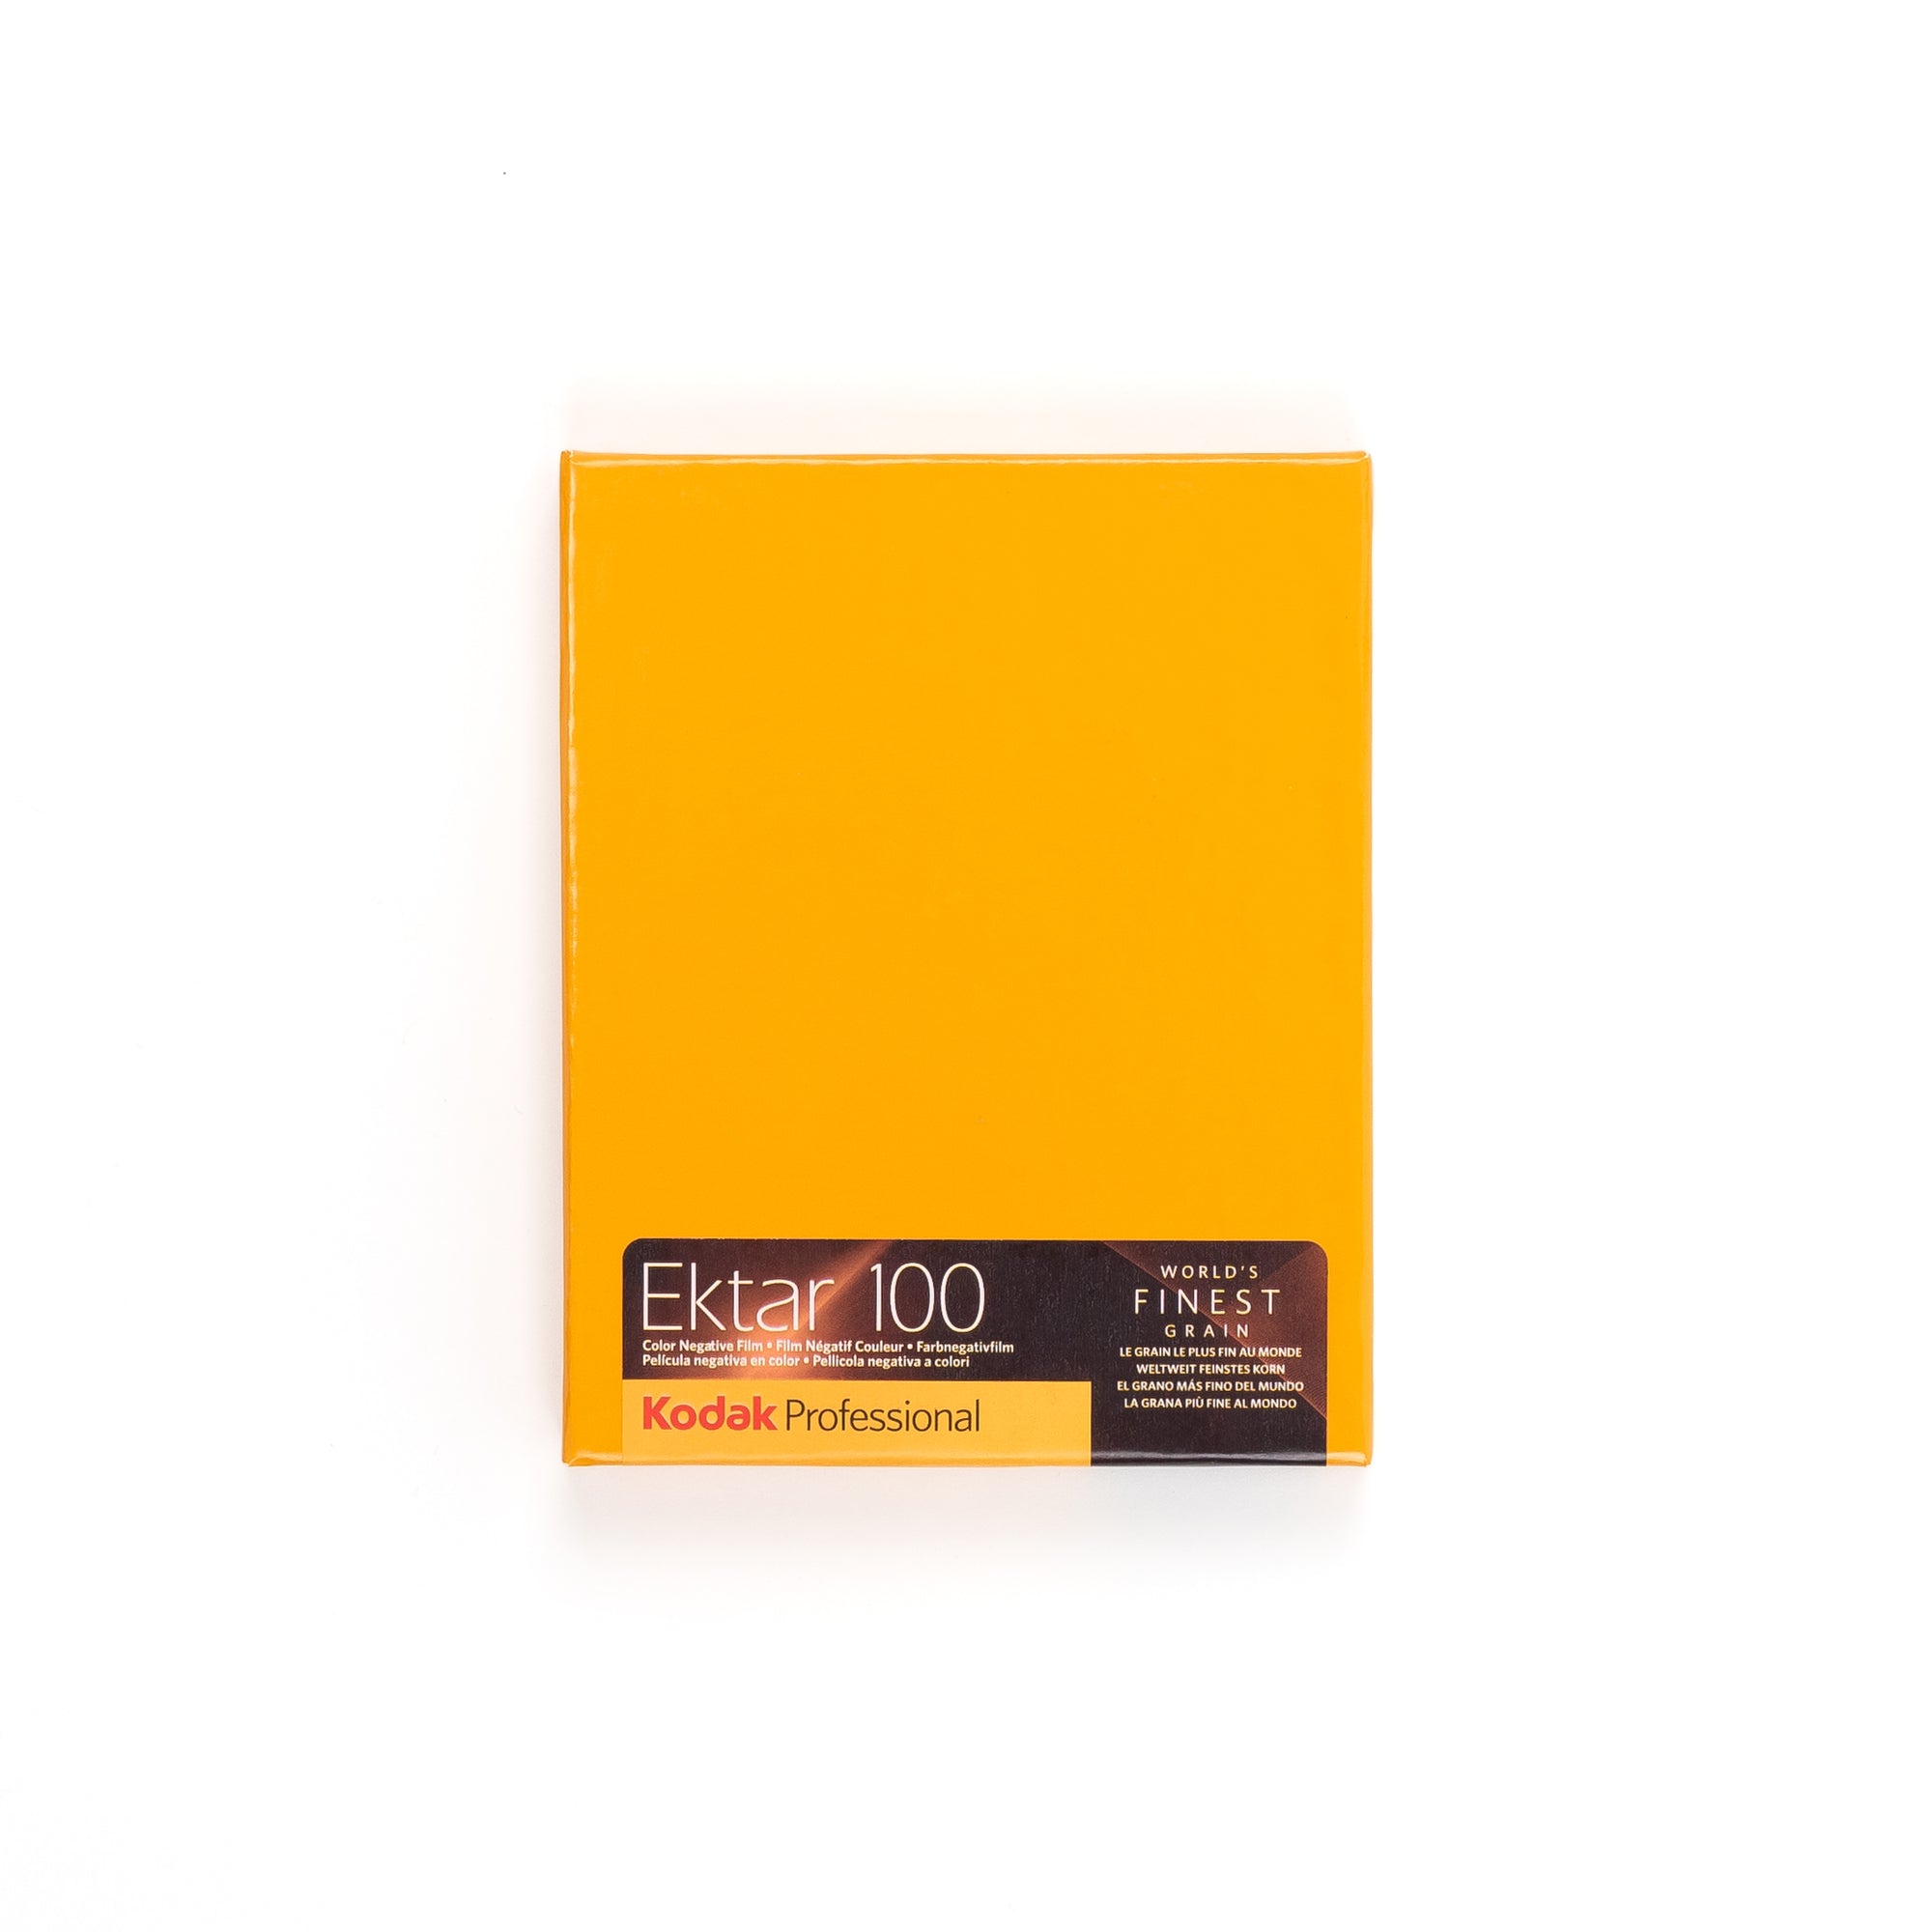 Kodak Ektar 100 4x5 Film (10 Sheets)